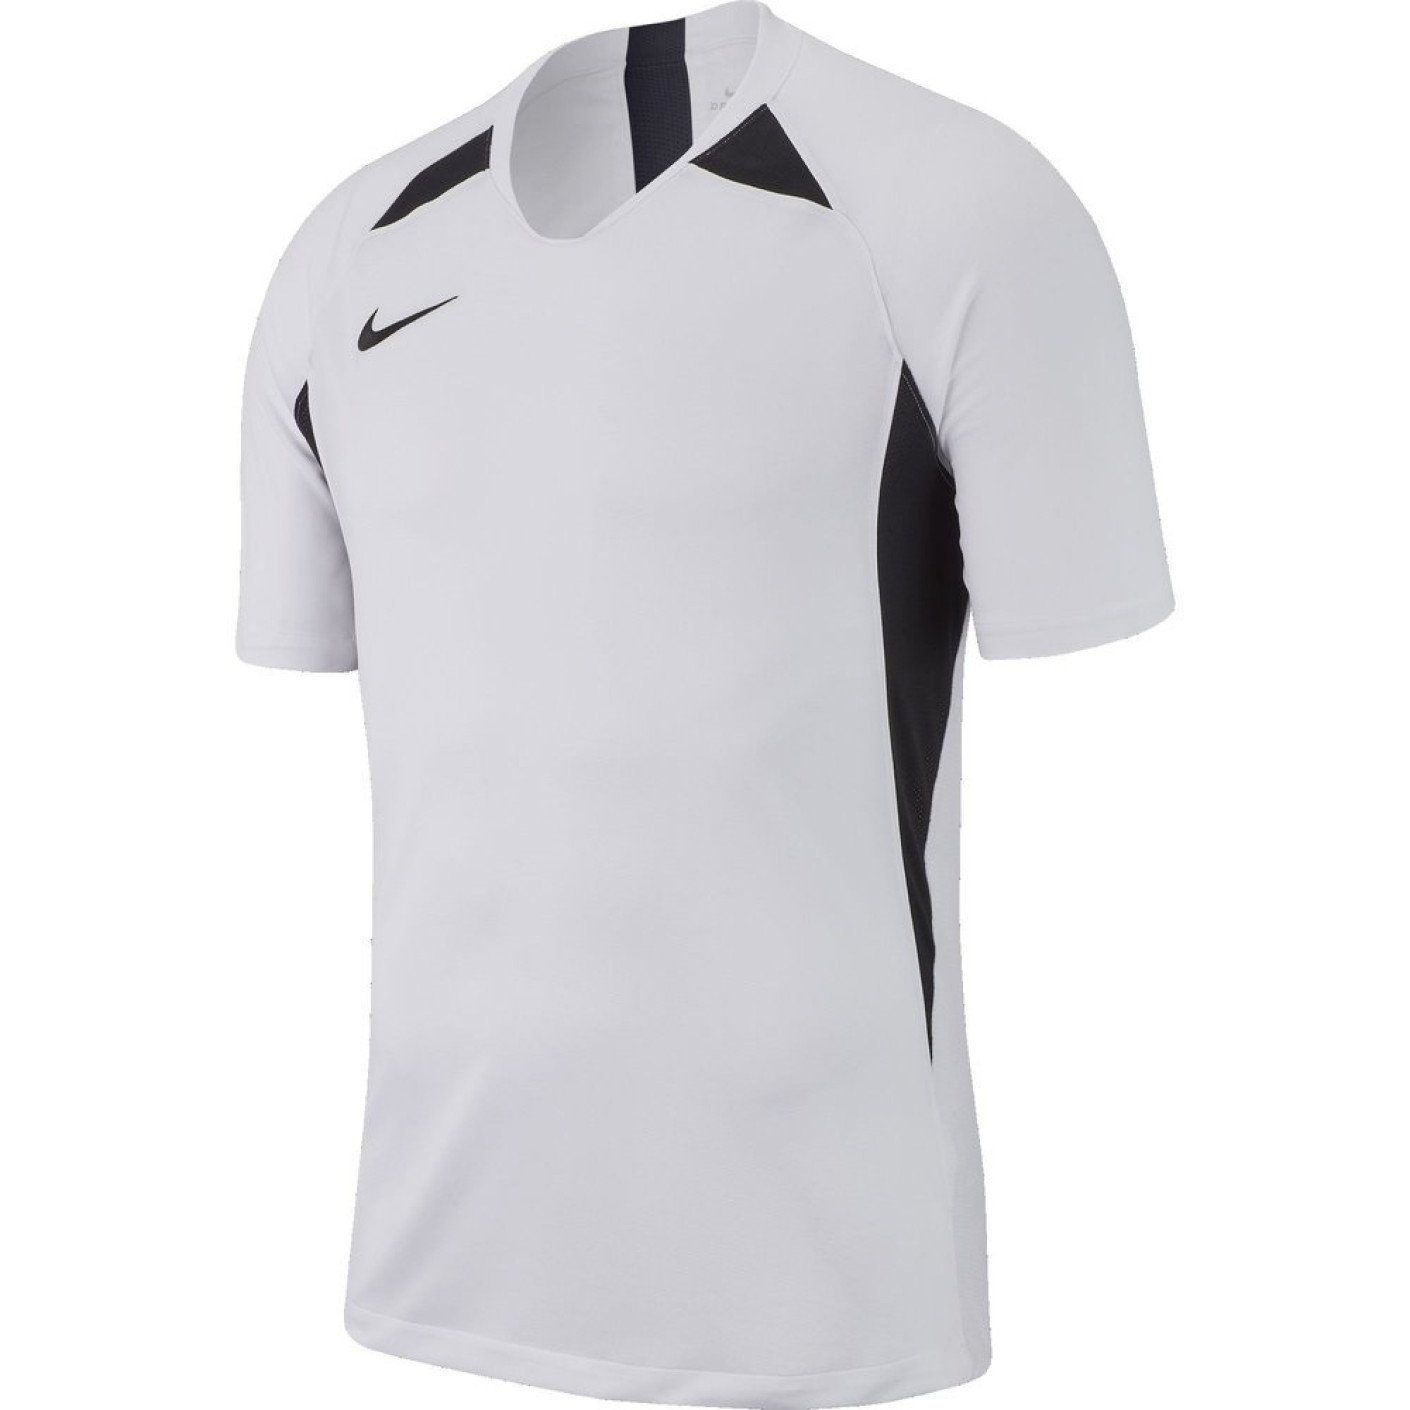 Nike Dri-FIT Legend Voetbalshirt Wit Zwart